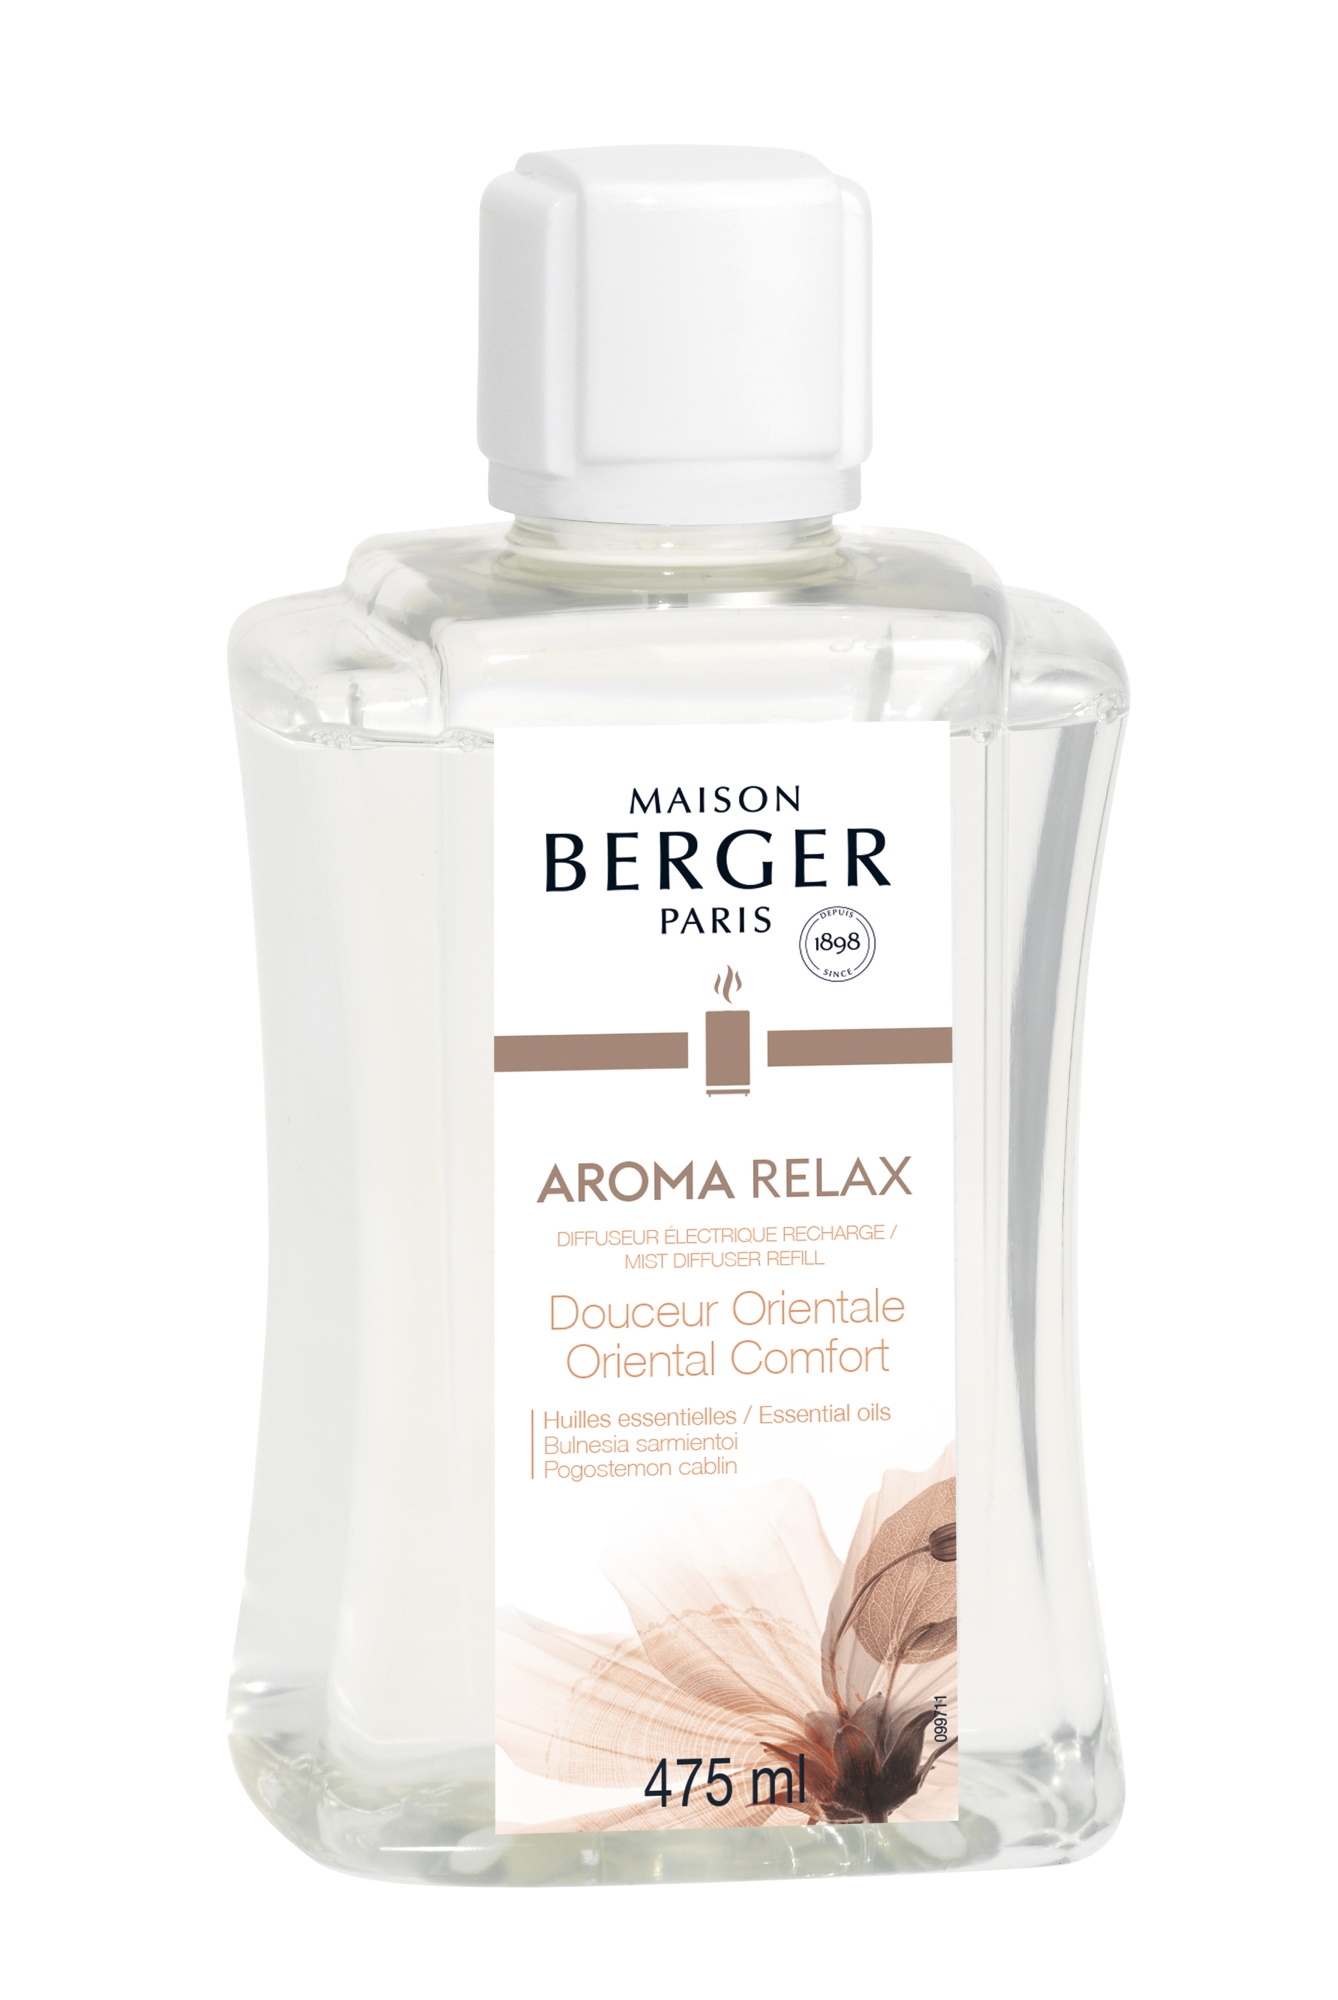 Parfum pentru difuzor ultrasonic Berger Aroma Relax – Douceur Orientale 475ml sensodays.ro